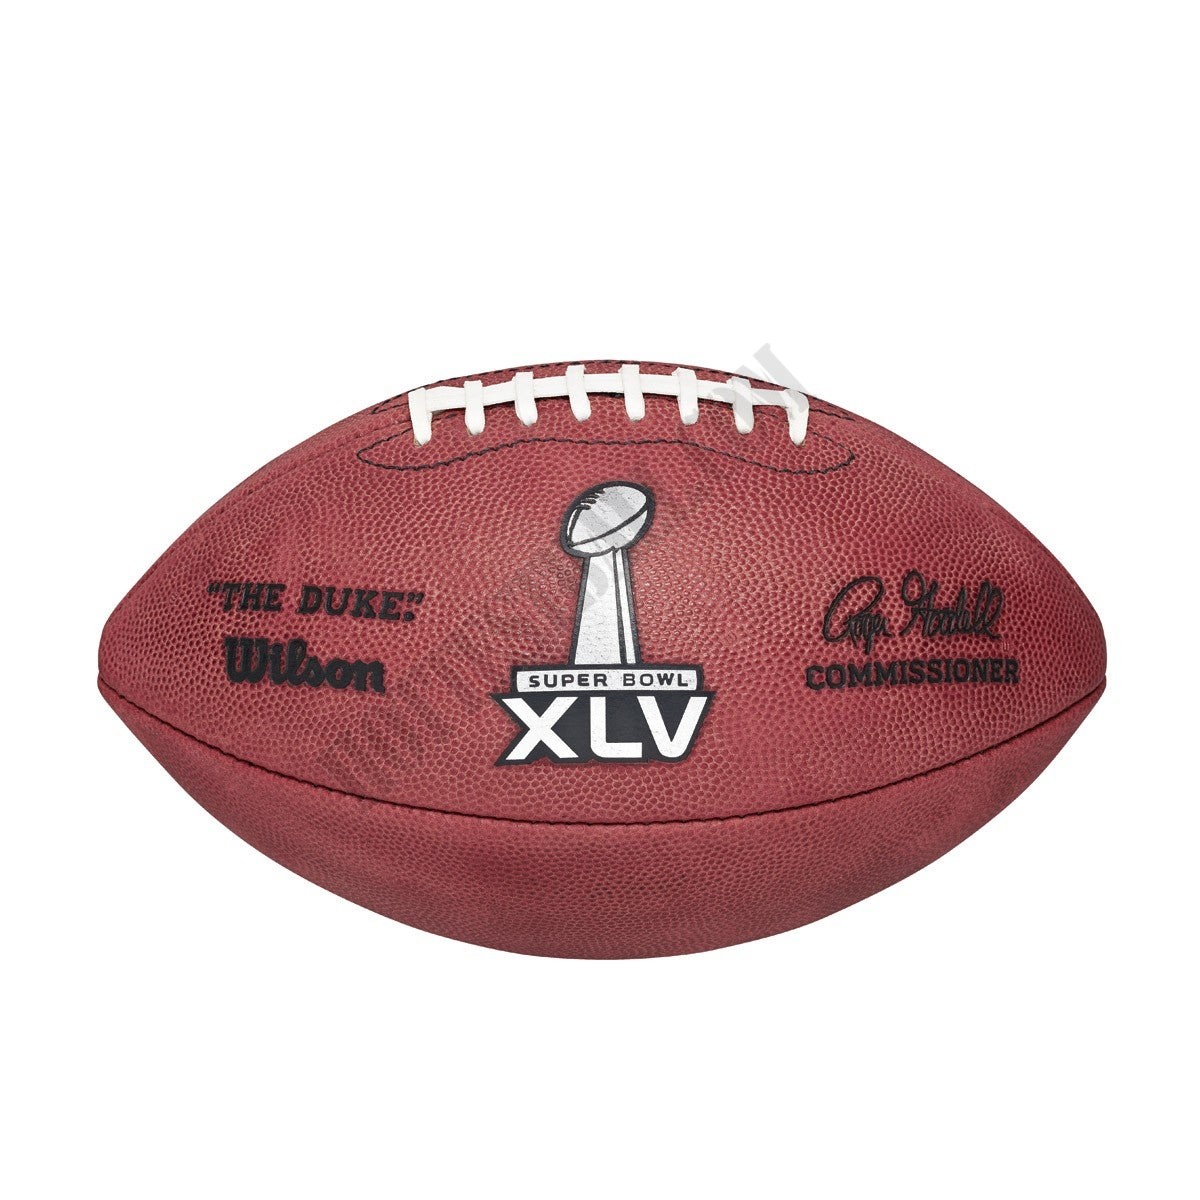 Super Bowl XLV Game Football - Green Bay Packers ● Wilson Promotions - Super Bowl XLV Game Football - Green Bay Packers ● Wilson Promotions